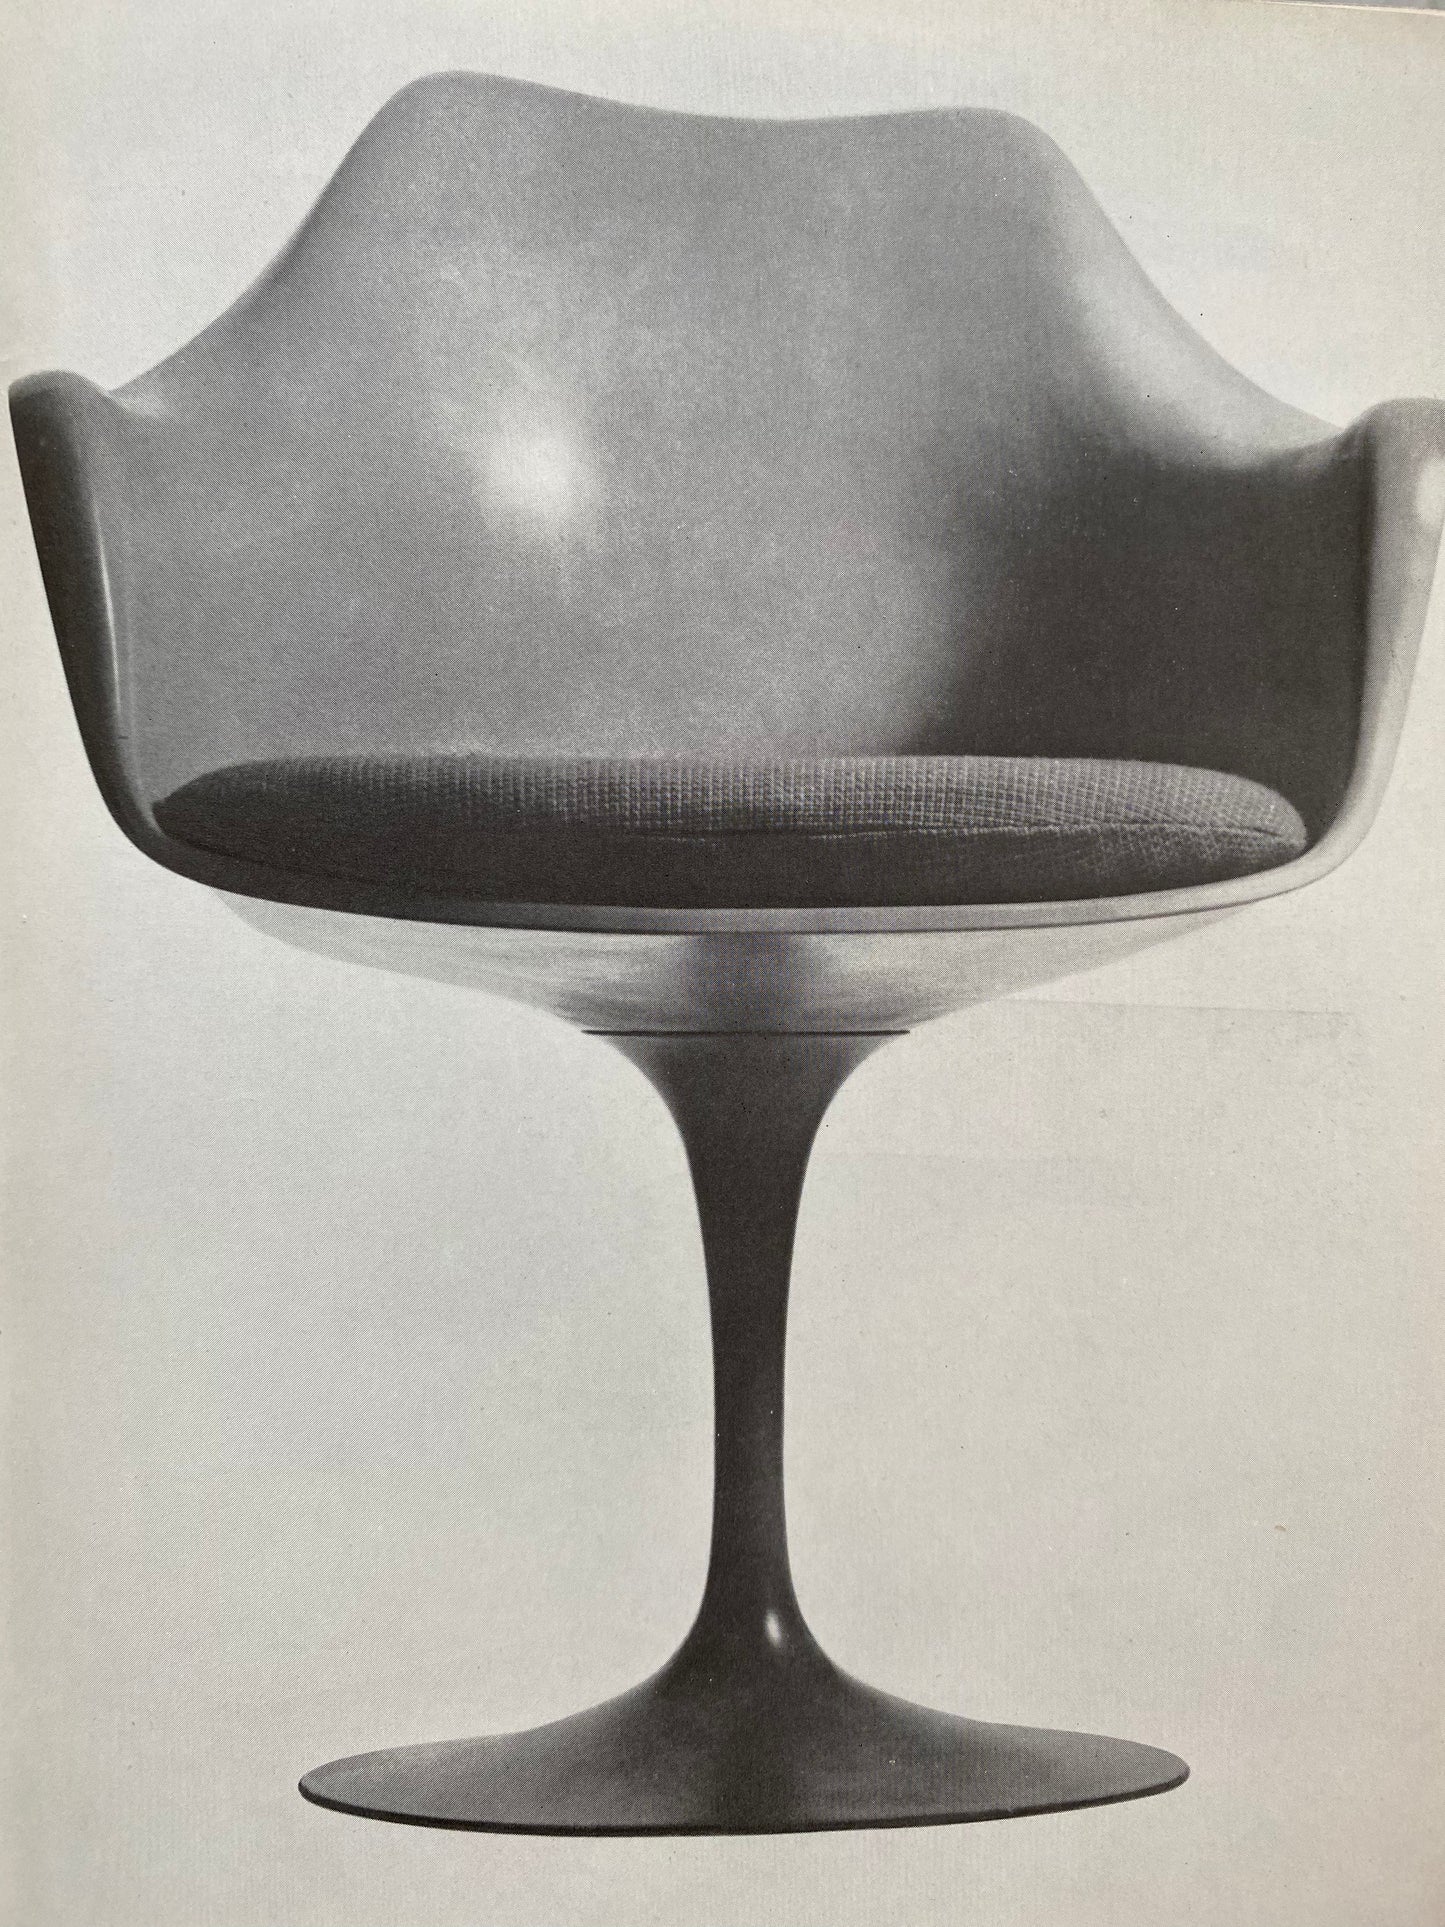 Introduction to Twentieth Century Design (1959)